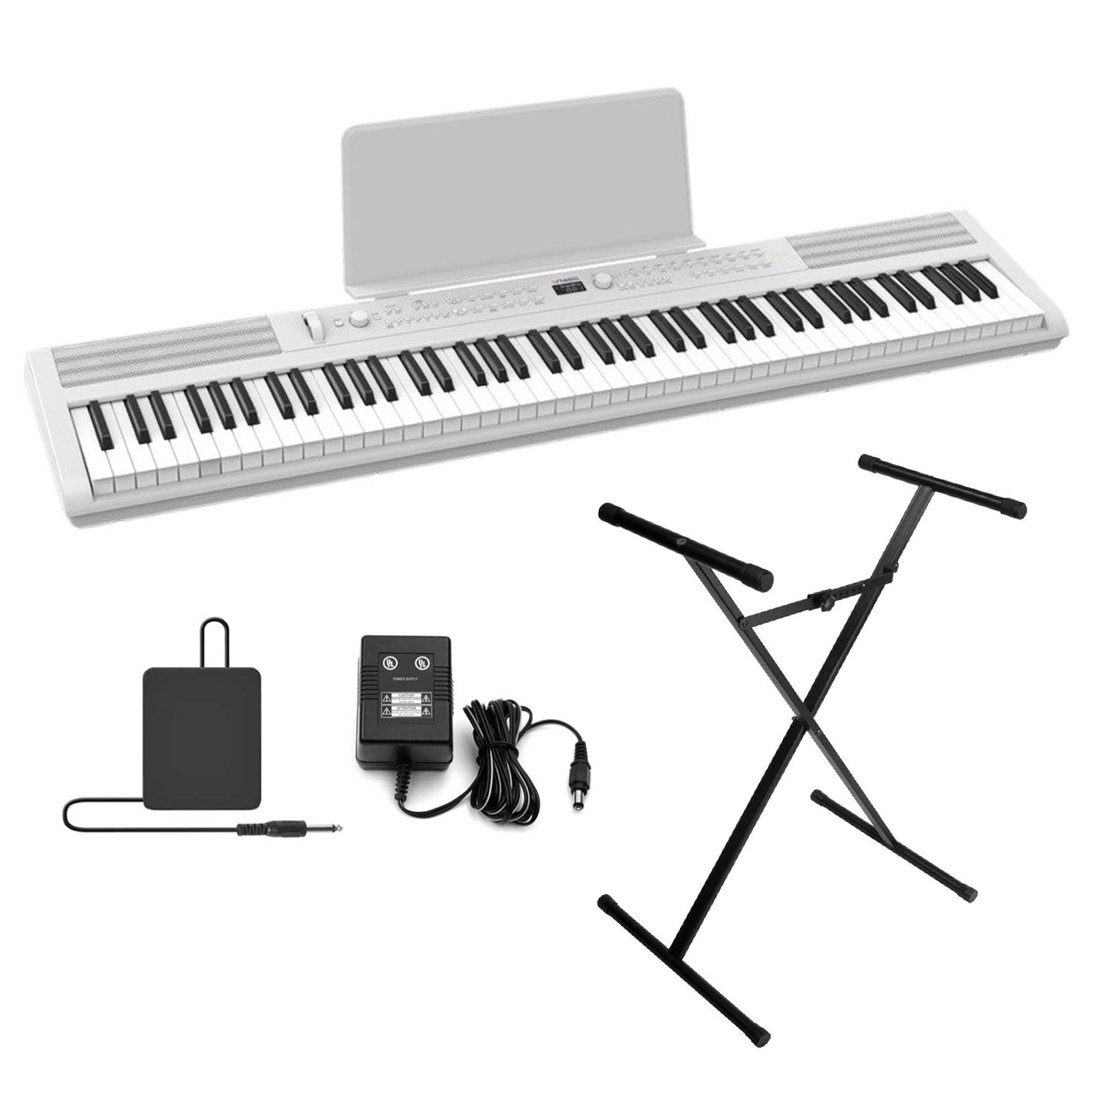 Artesia Digitalpiano PE-88 Weiss mit Keyboardständer